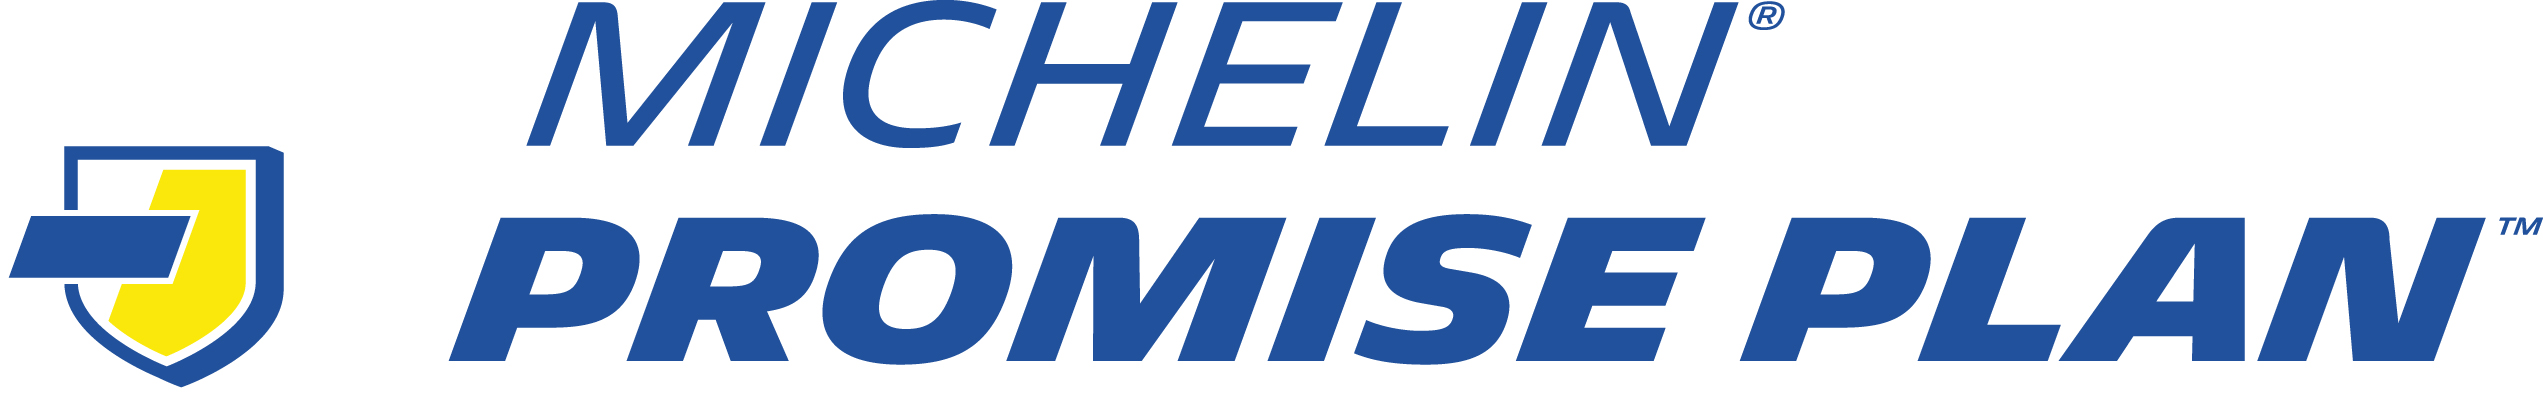 Michelin Promise Plan Logo